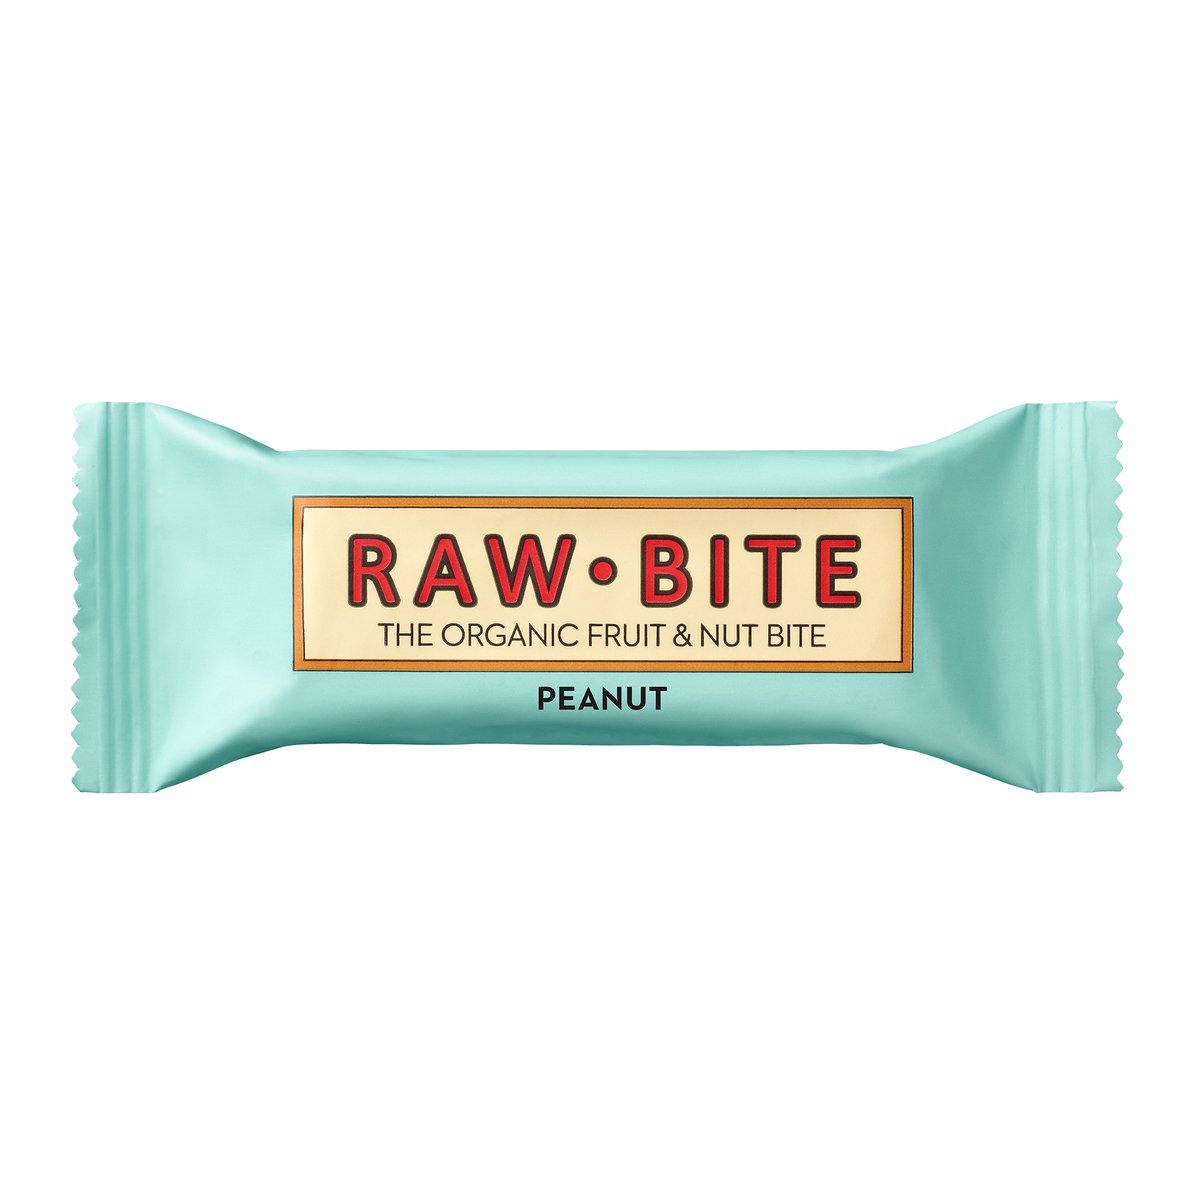 Rawbite Organic Fruit & Nut Bite Peanut 50 g